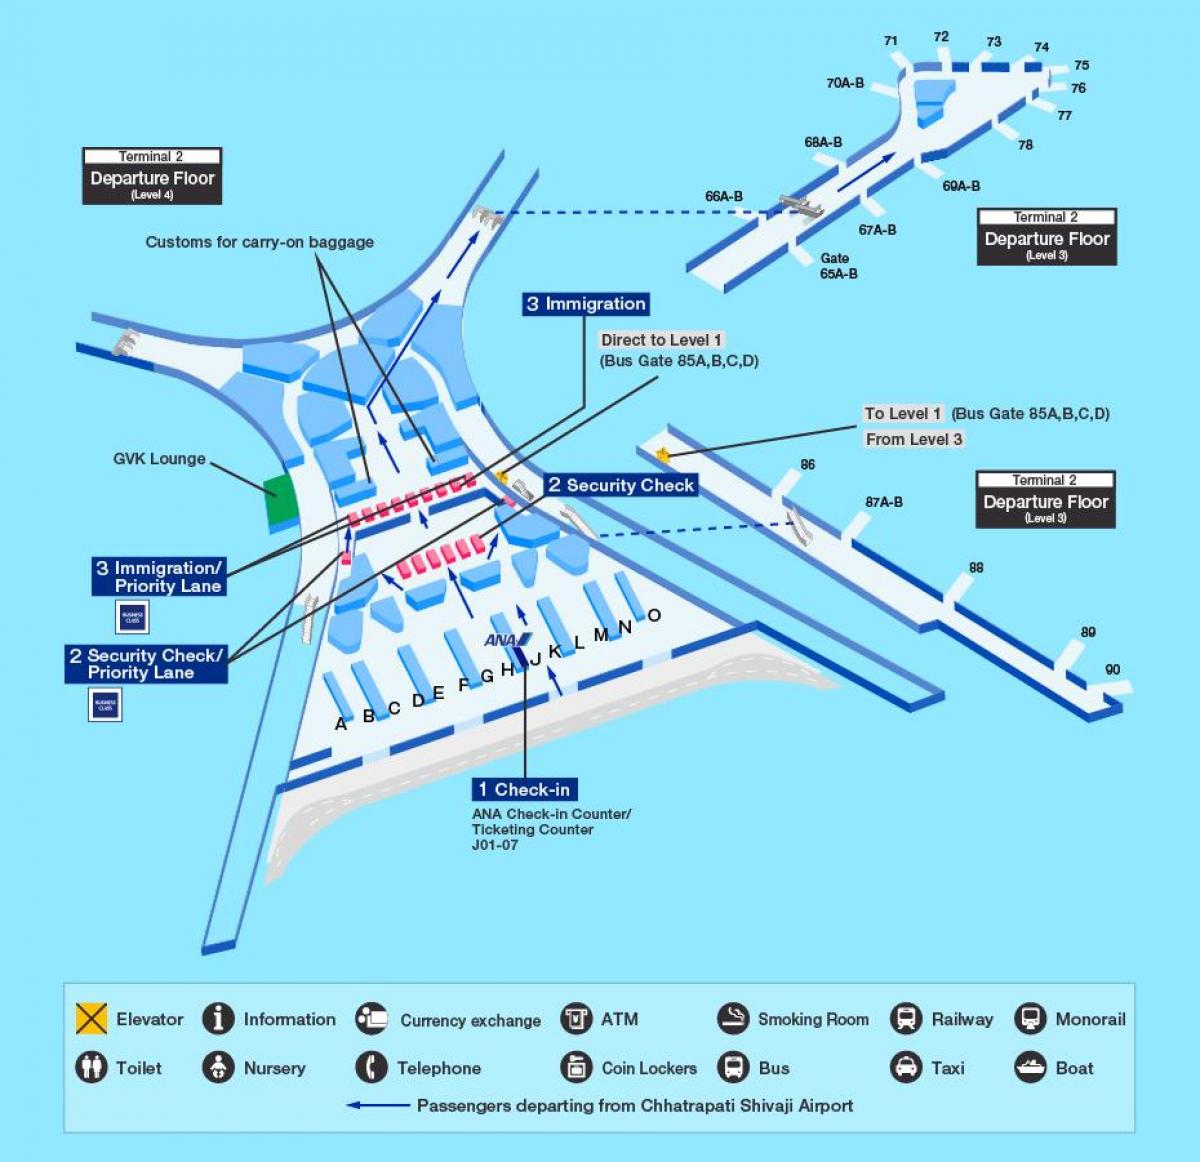 Mumbai international airport terminal 2 kort